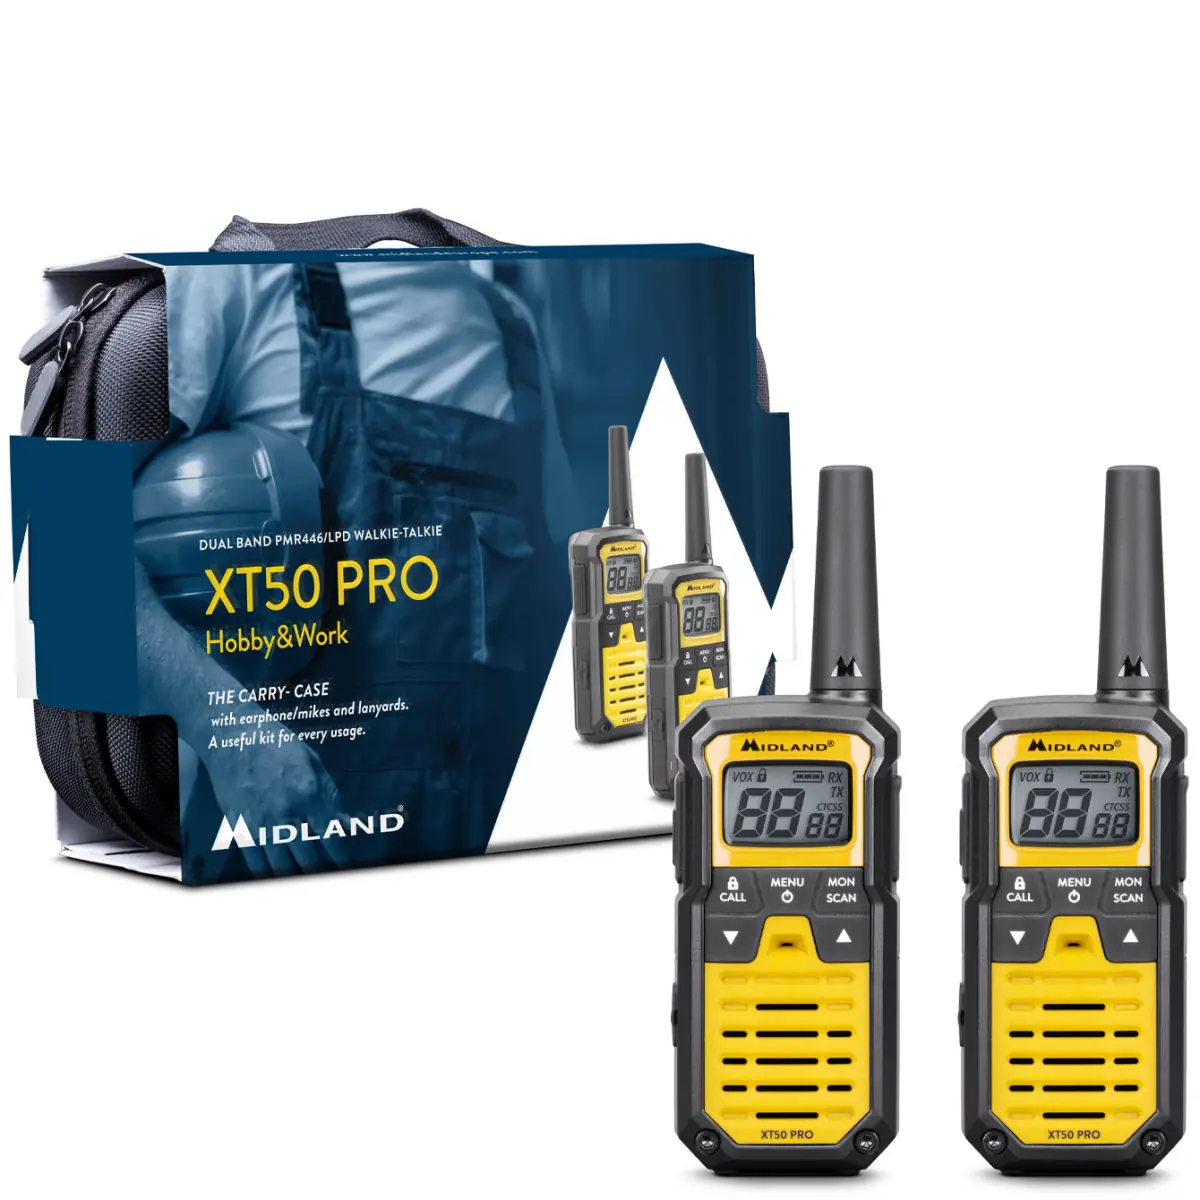 Midland XT50 Pro Hobby & Work - Talkie walkie sans licence -  C1464.01 - pack avec mallette 